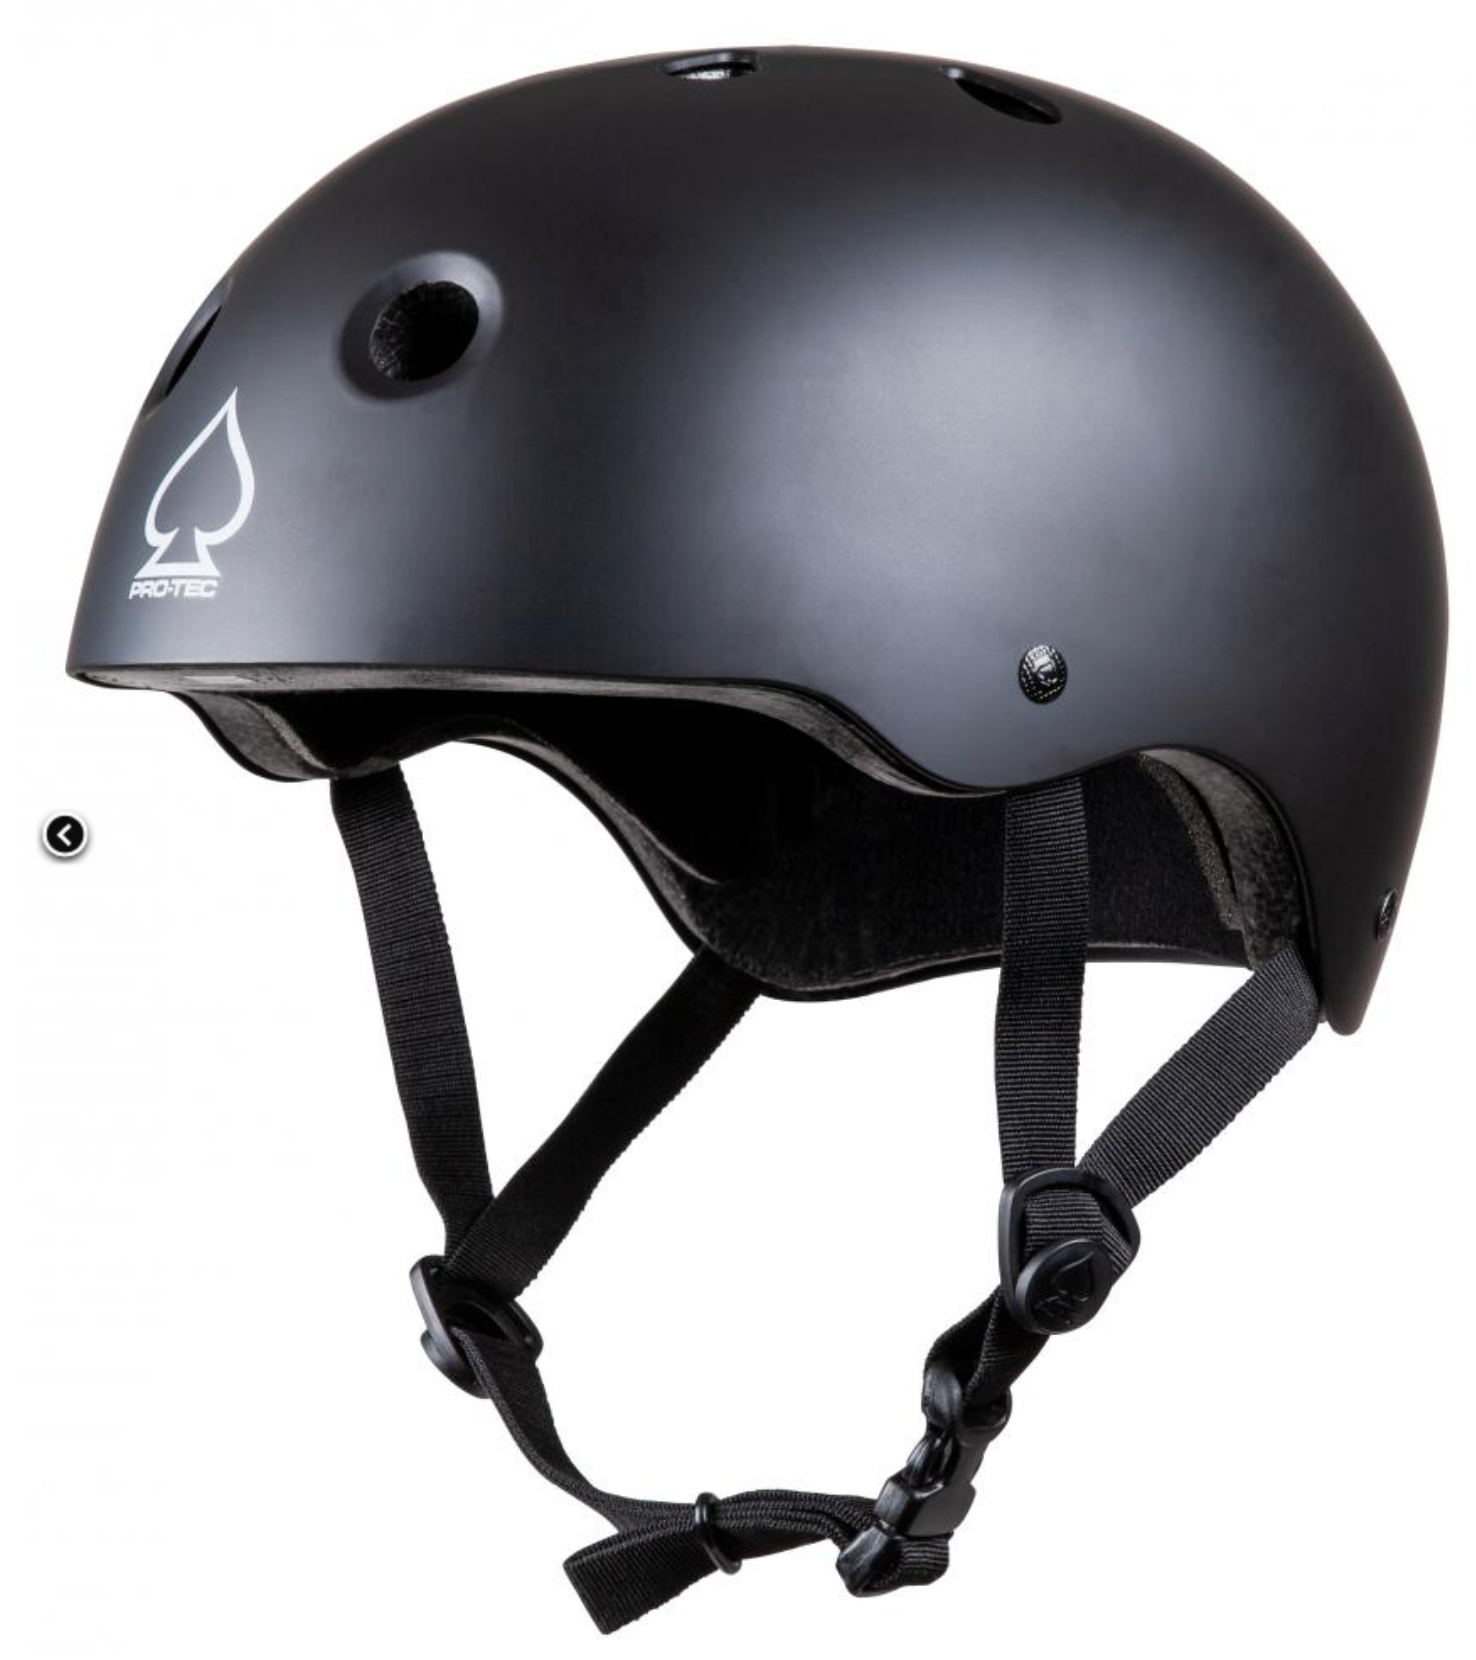 Pro-Tec Helmet Prime